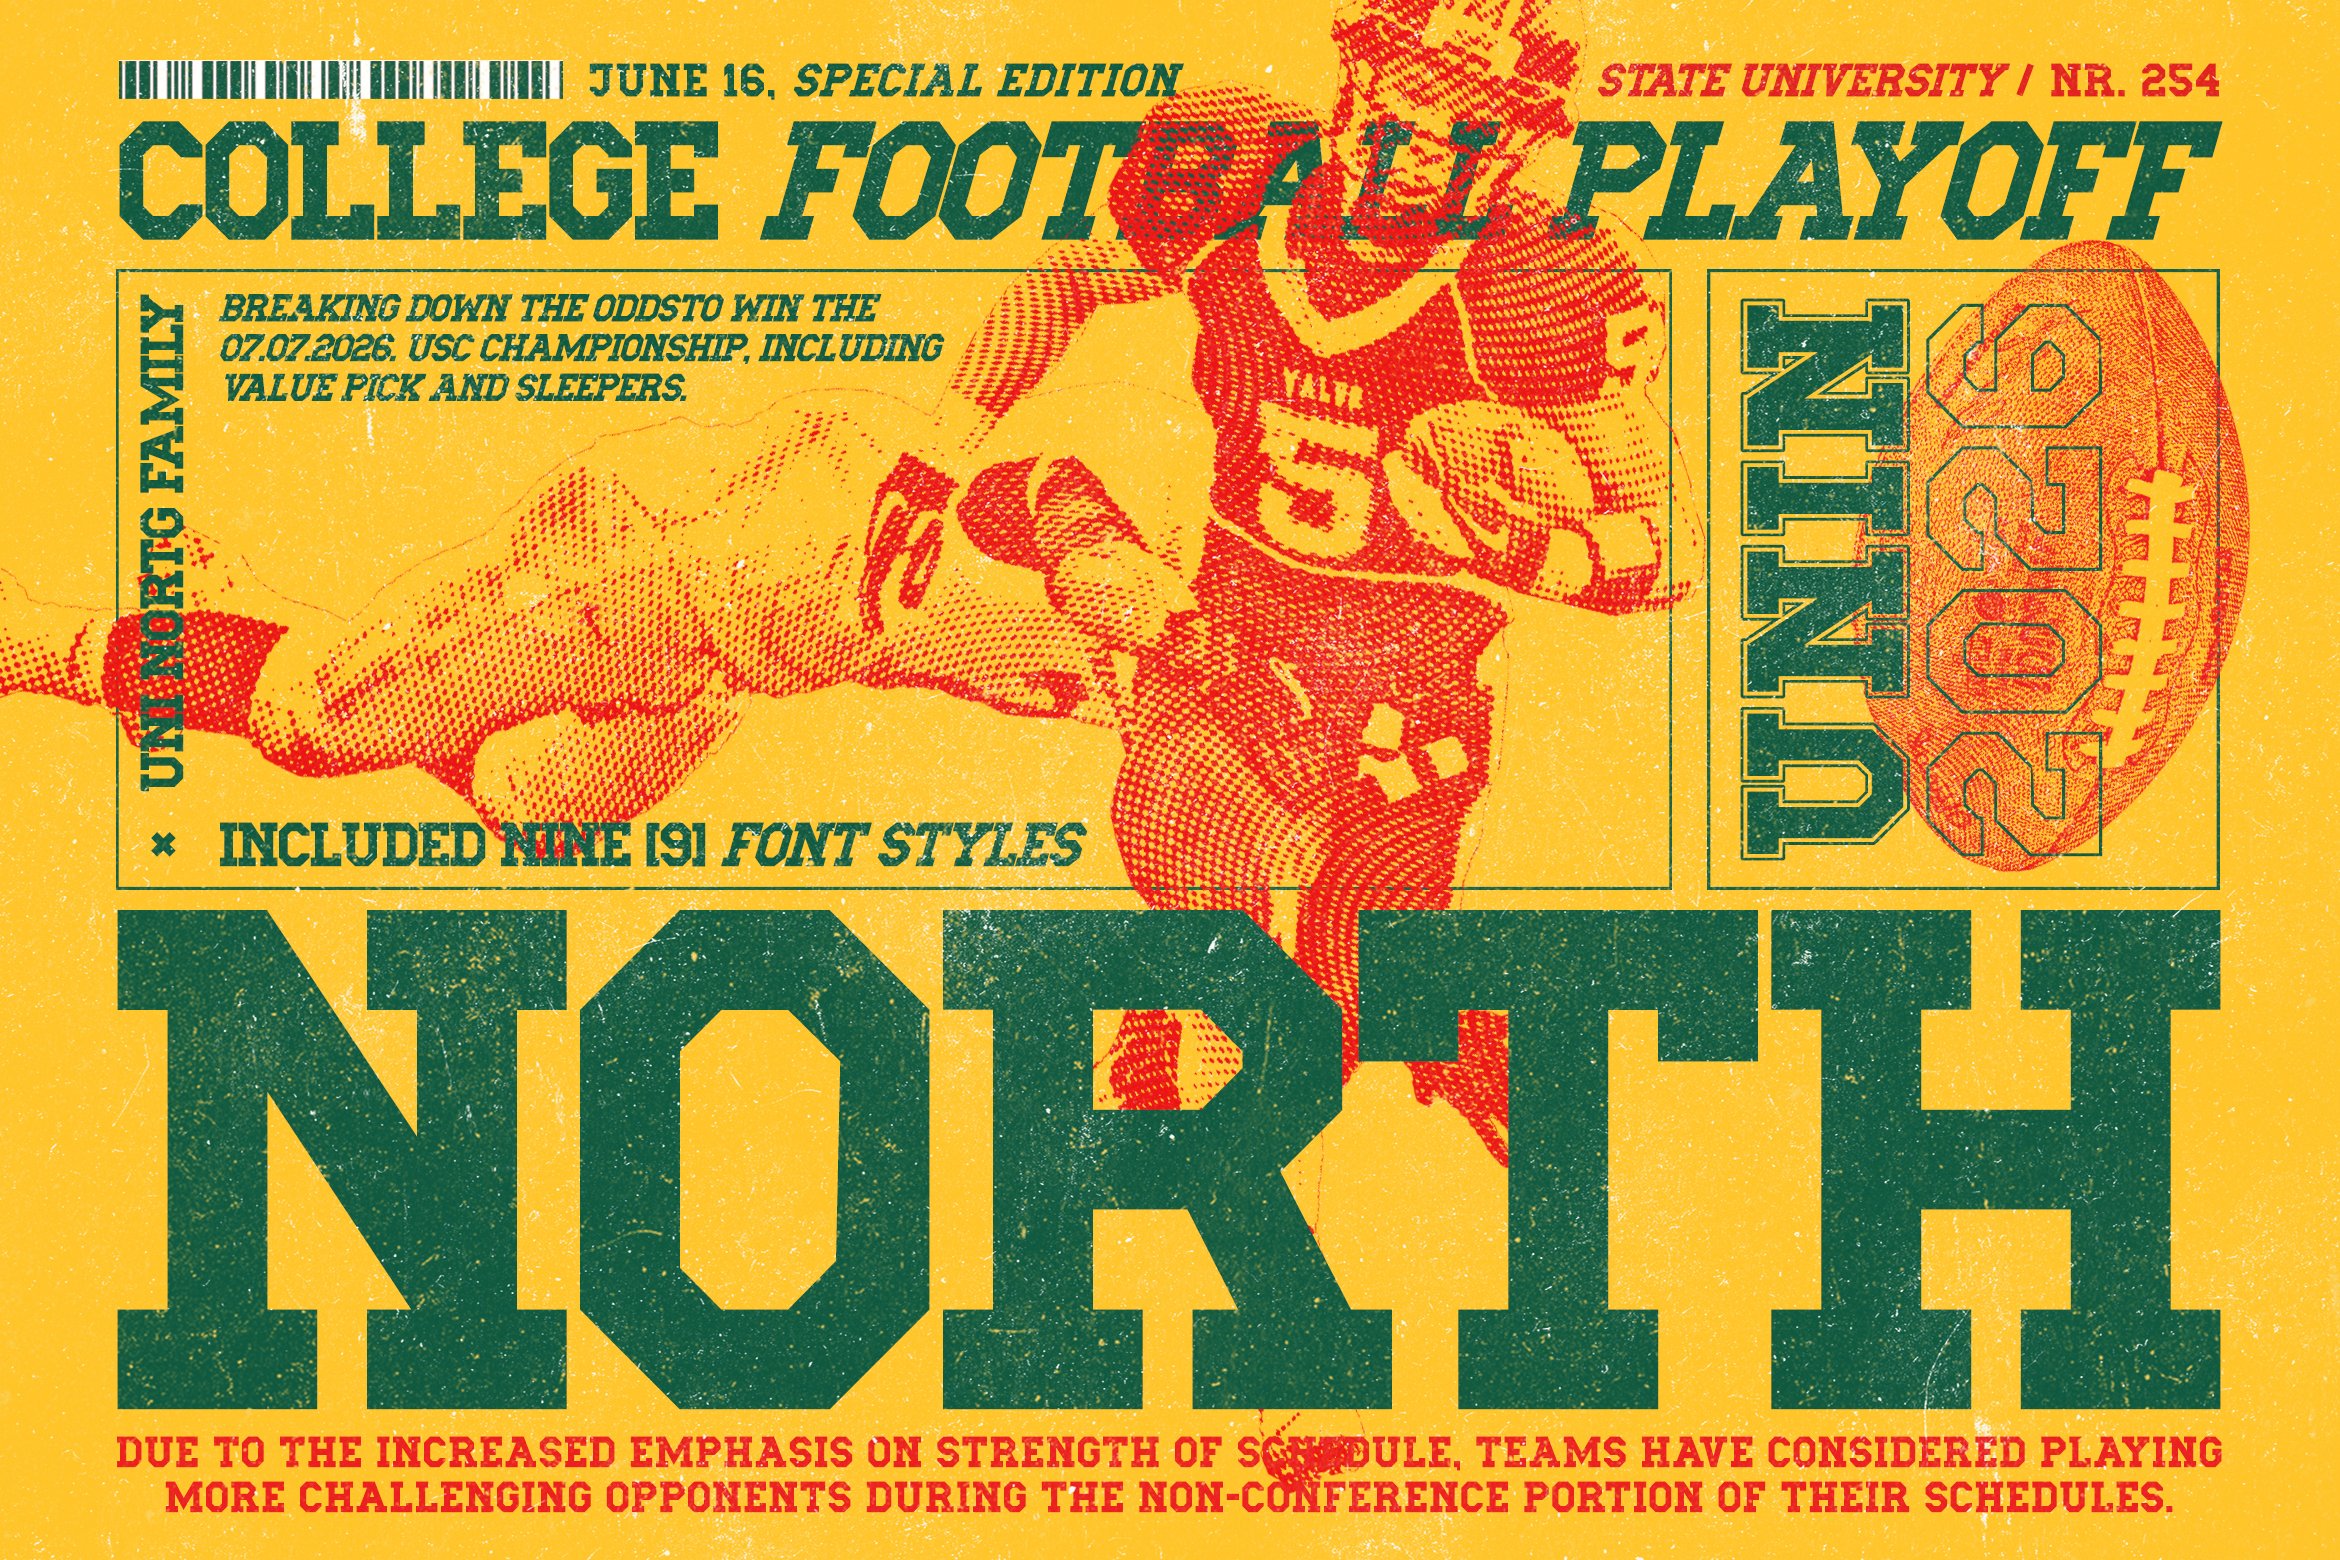 UNI North Font cover image.